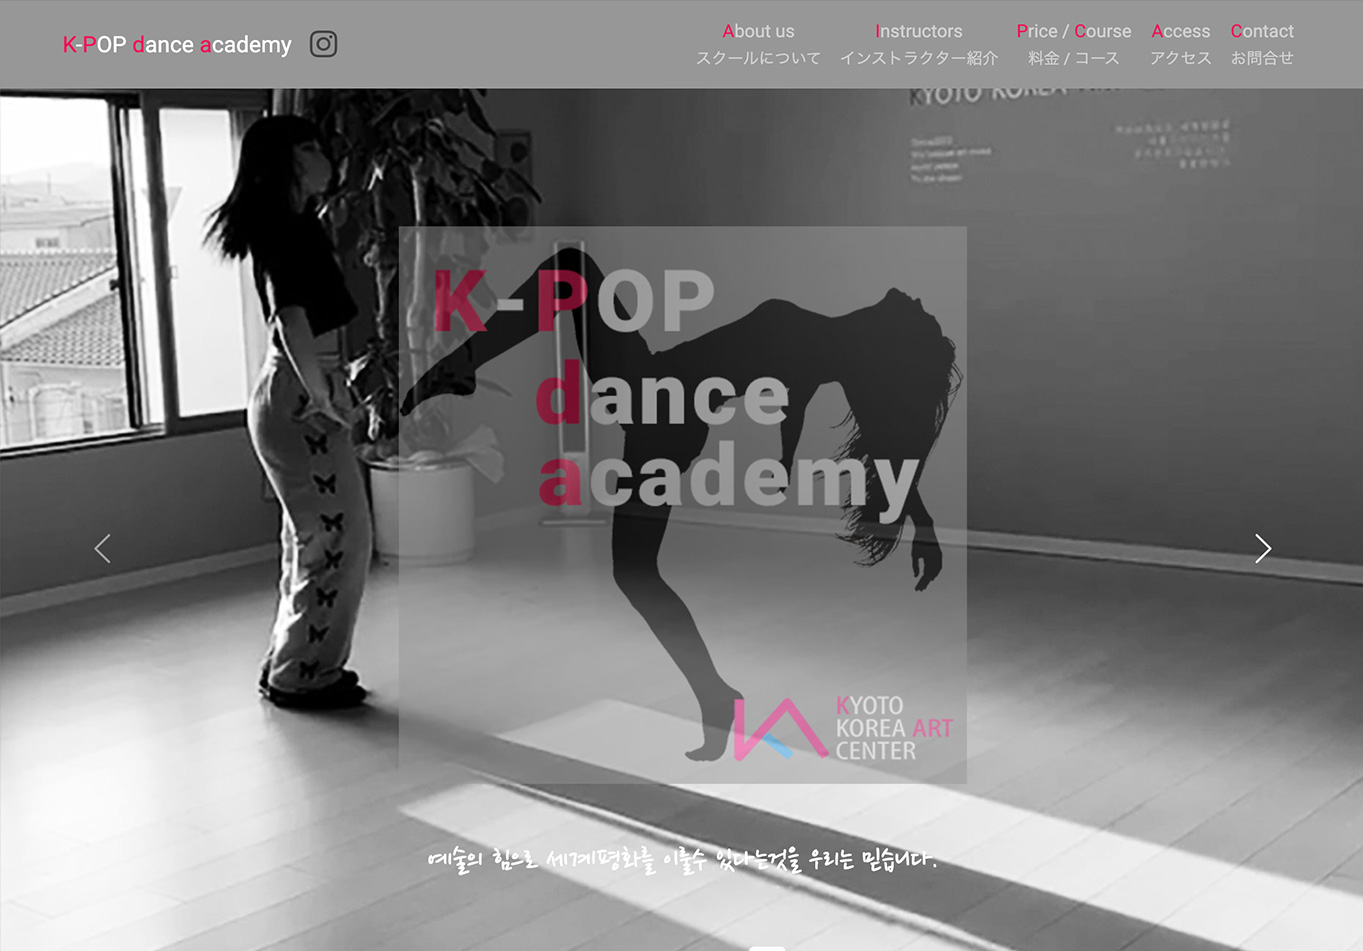 K-POP dance academy